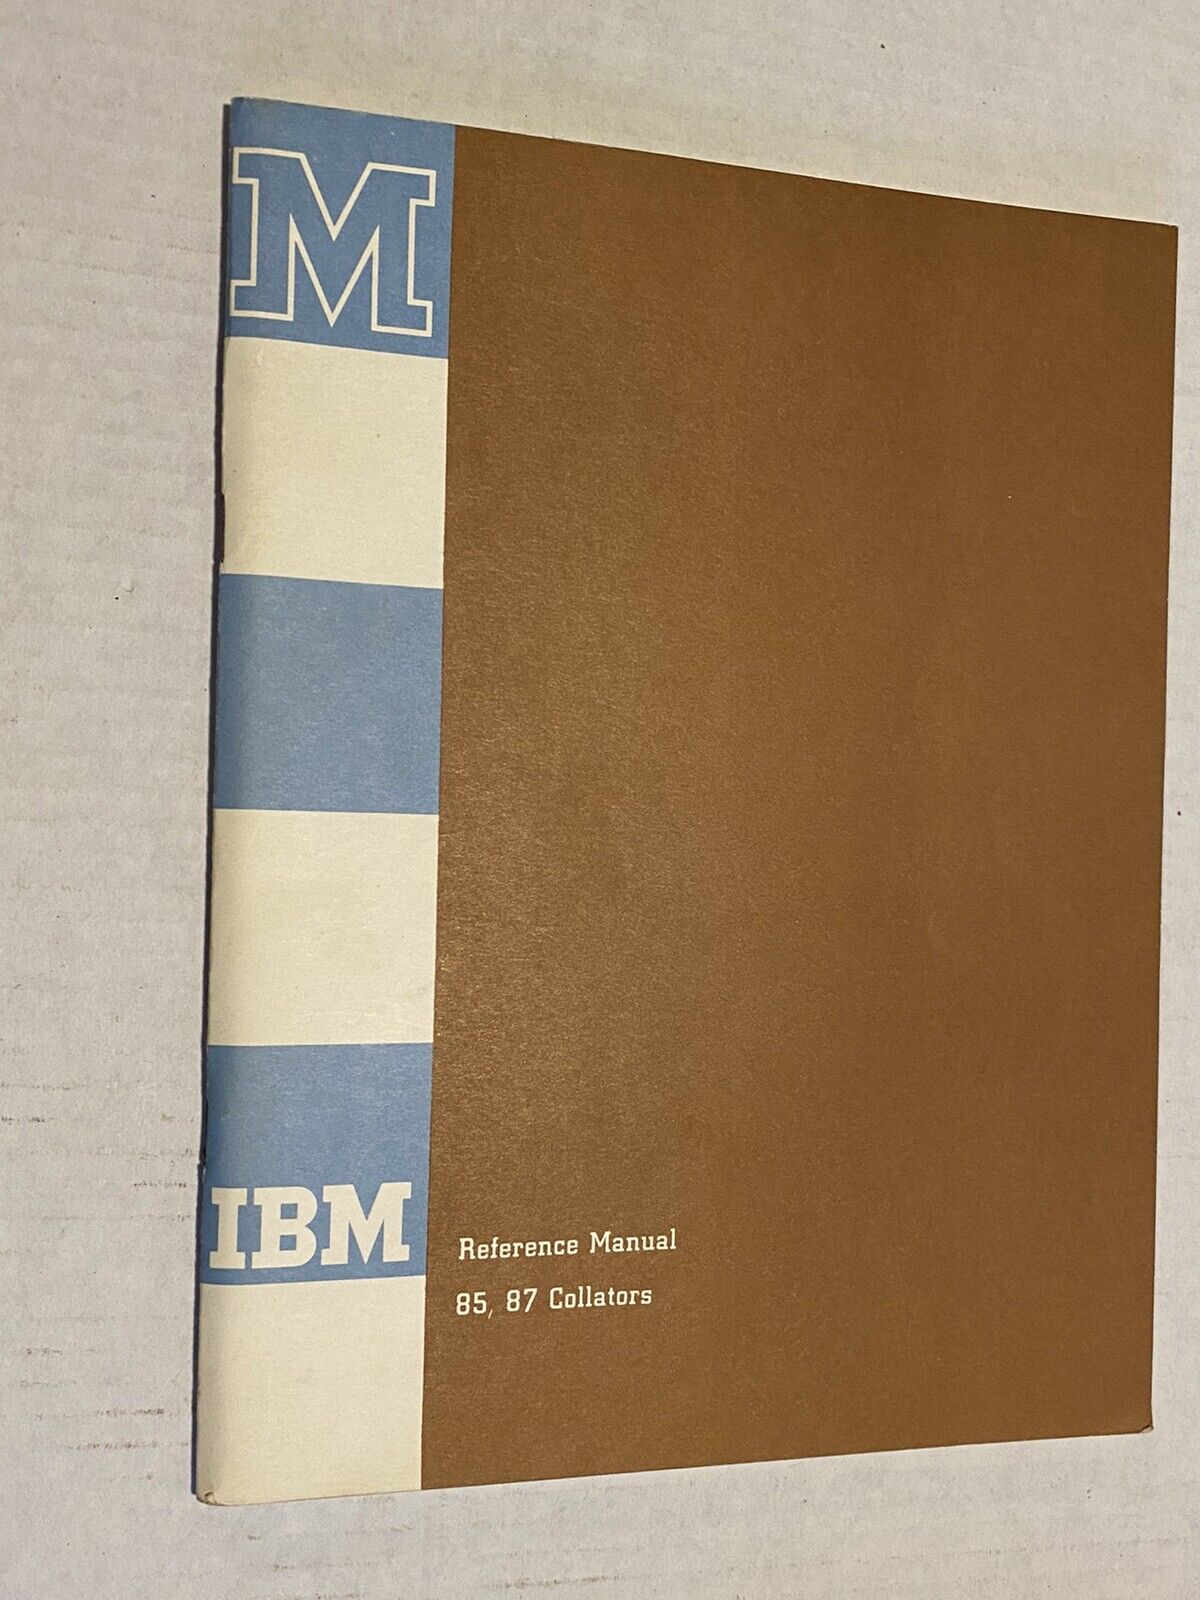 Vintage IBM Reference Manual 85, 87 Collators May 1960